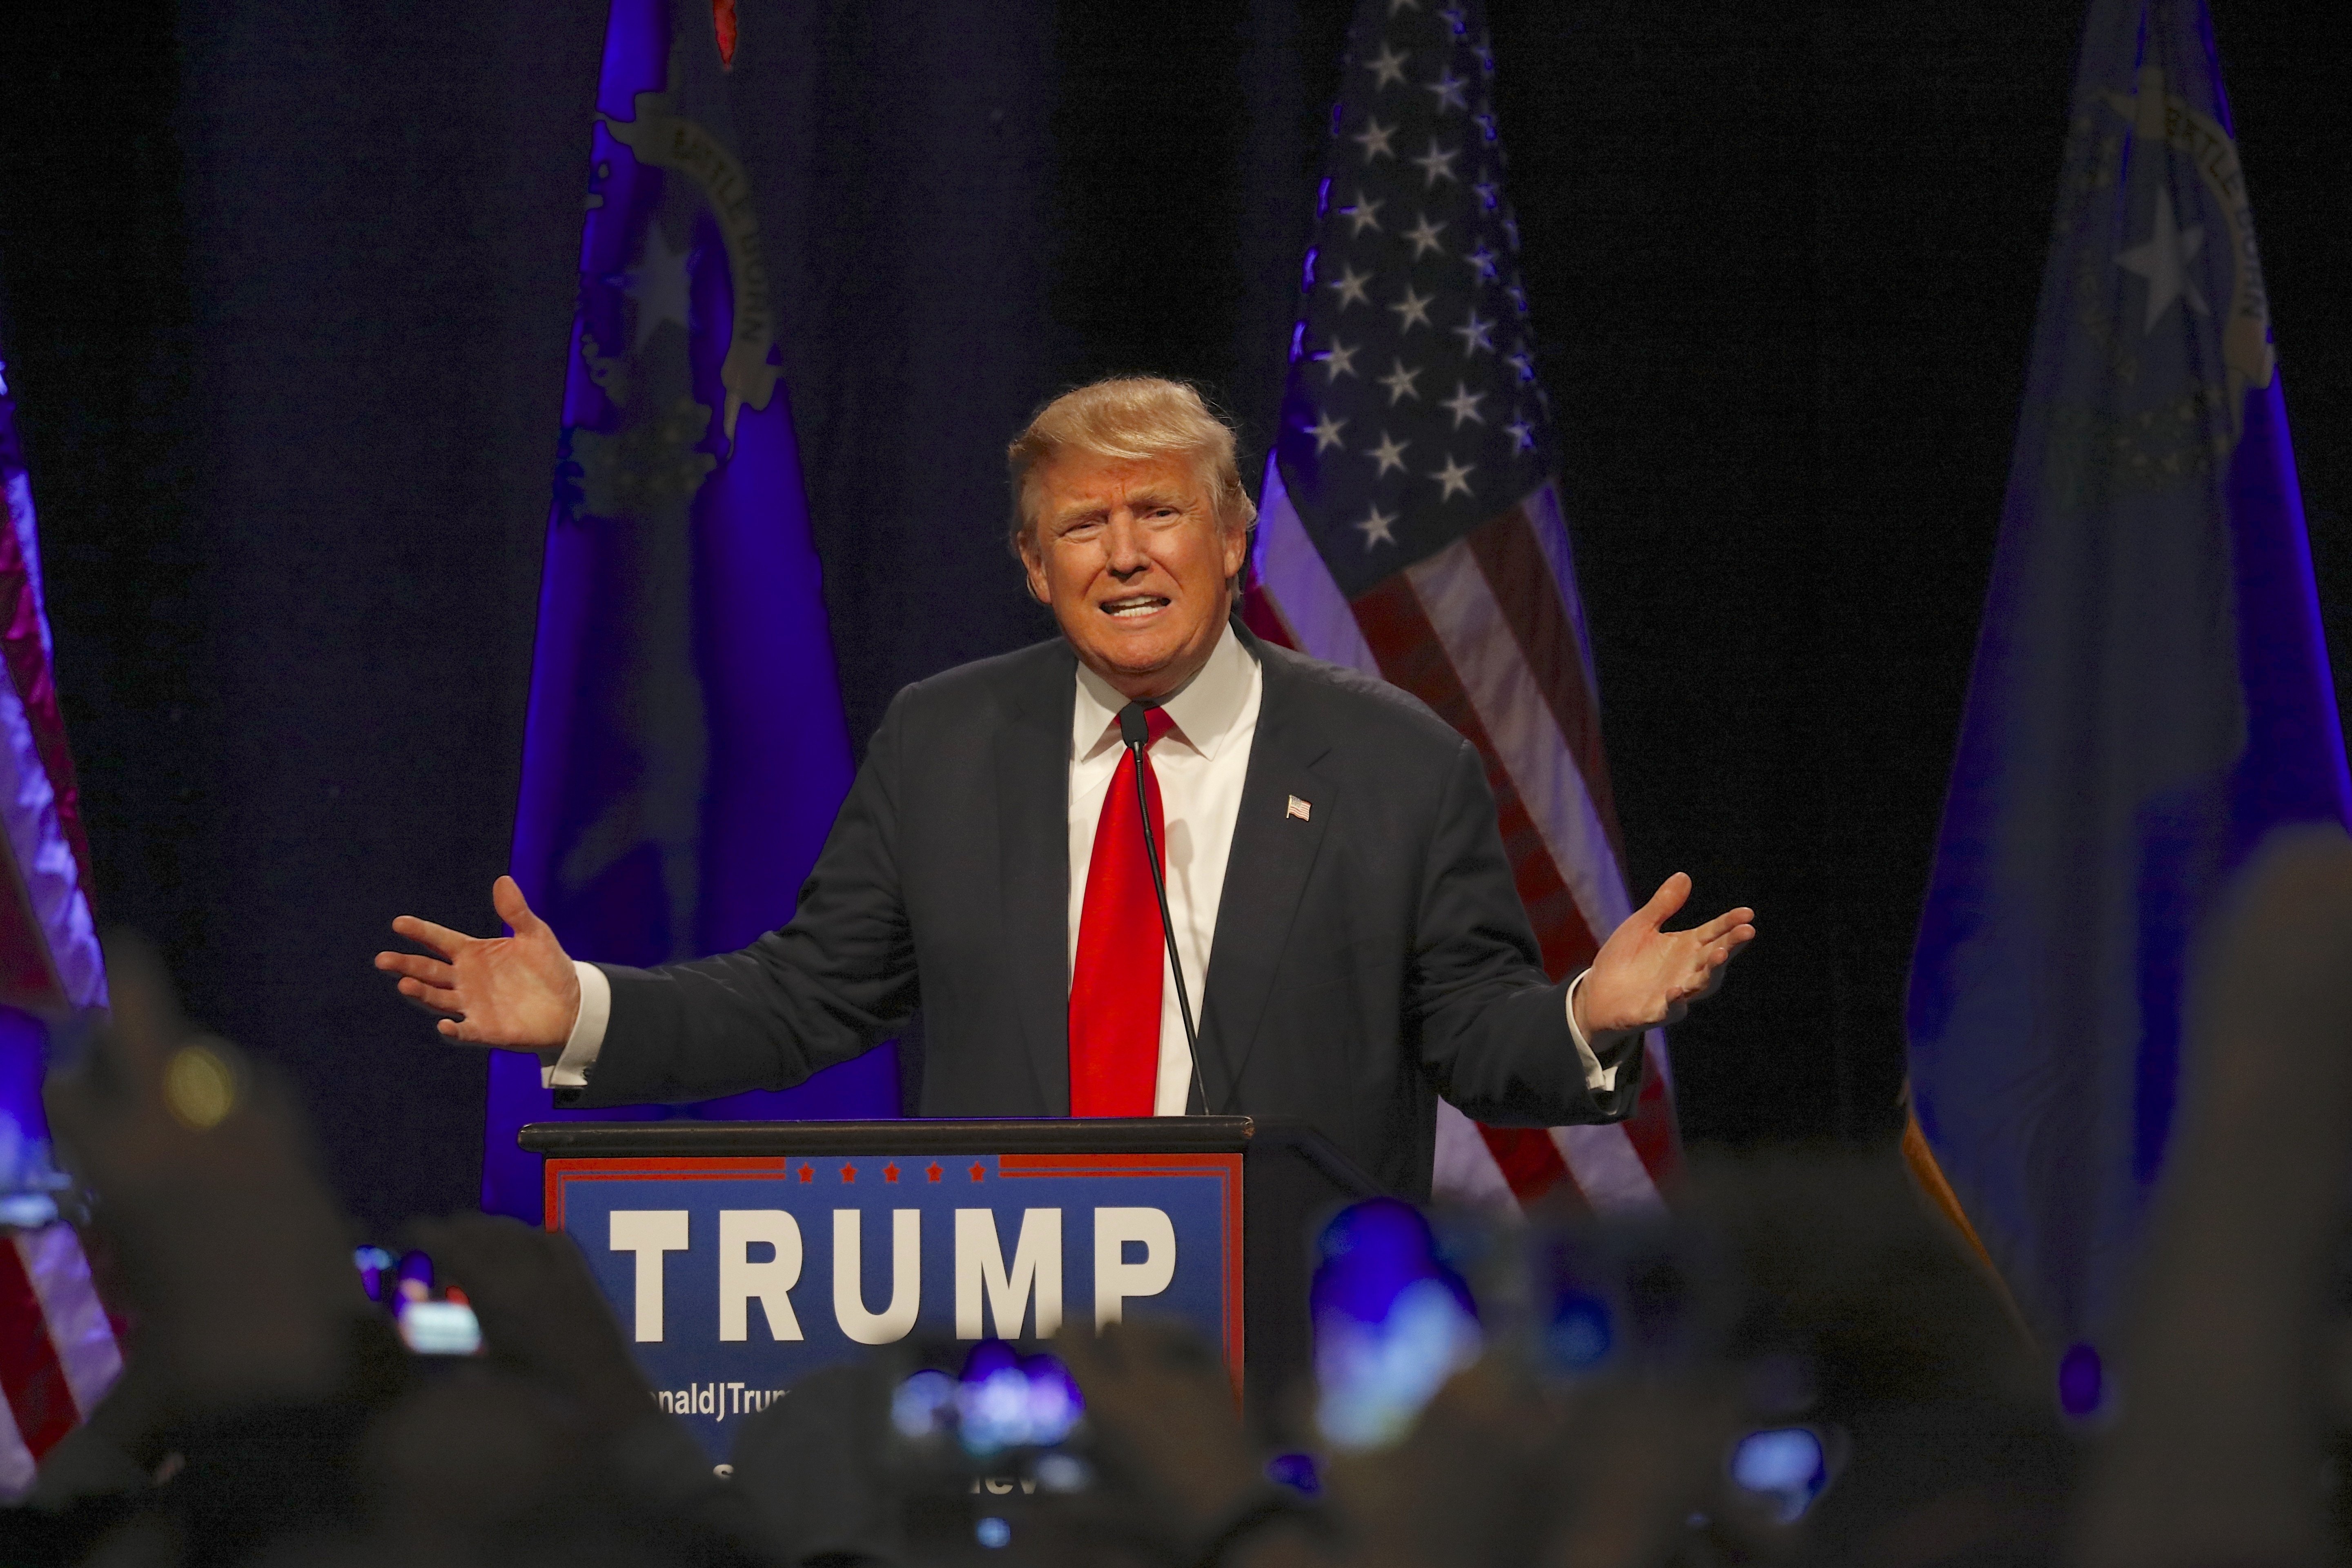  Donald Trump speaks at campaign event at Westgate Las Vegas Resort & Casino | Source: Shutterstock